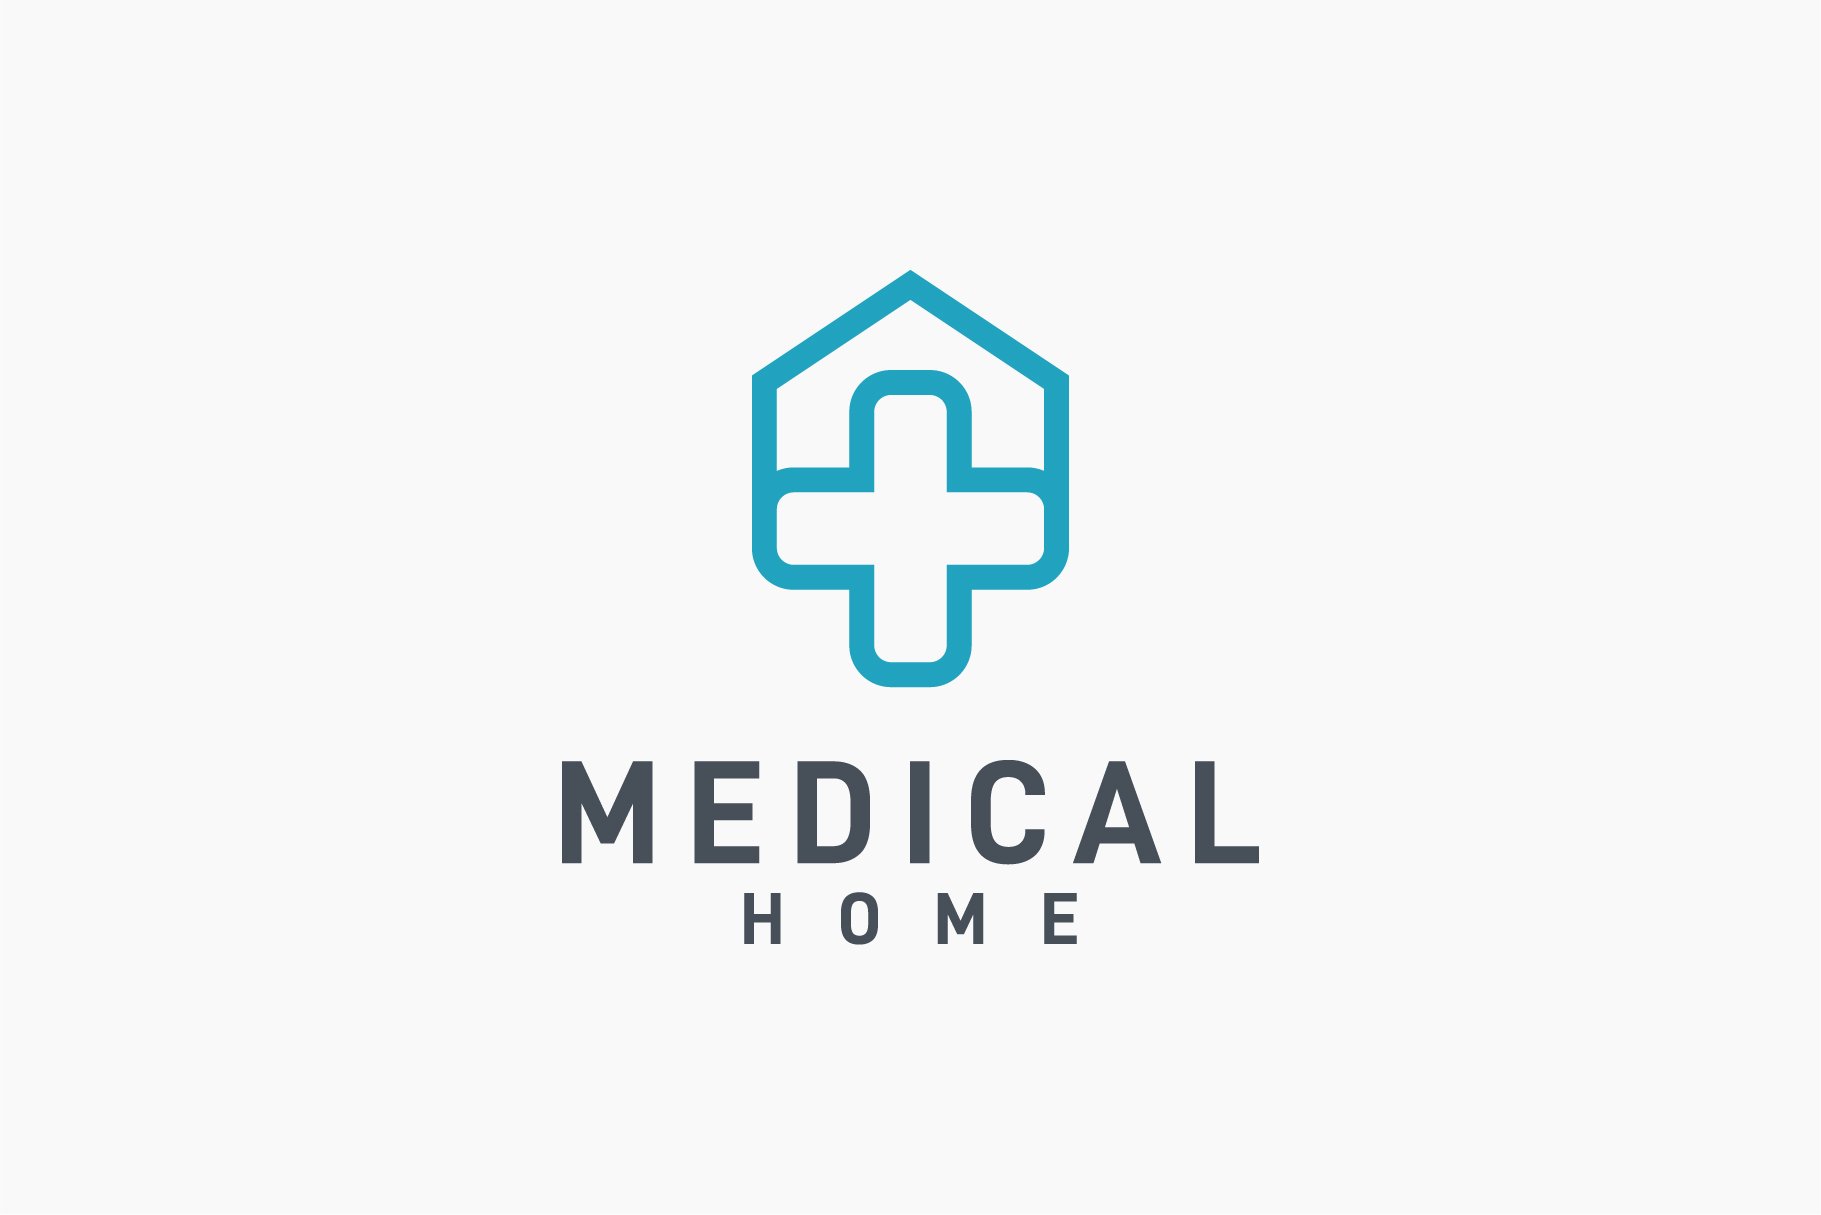 medical home logo design inspiration cover image.